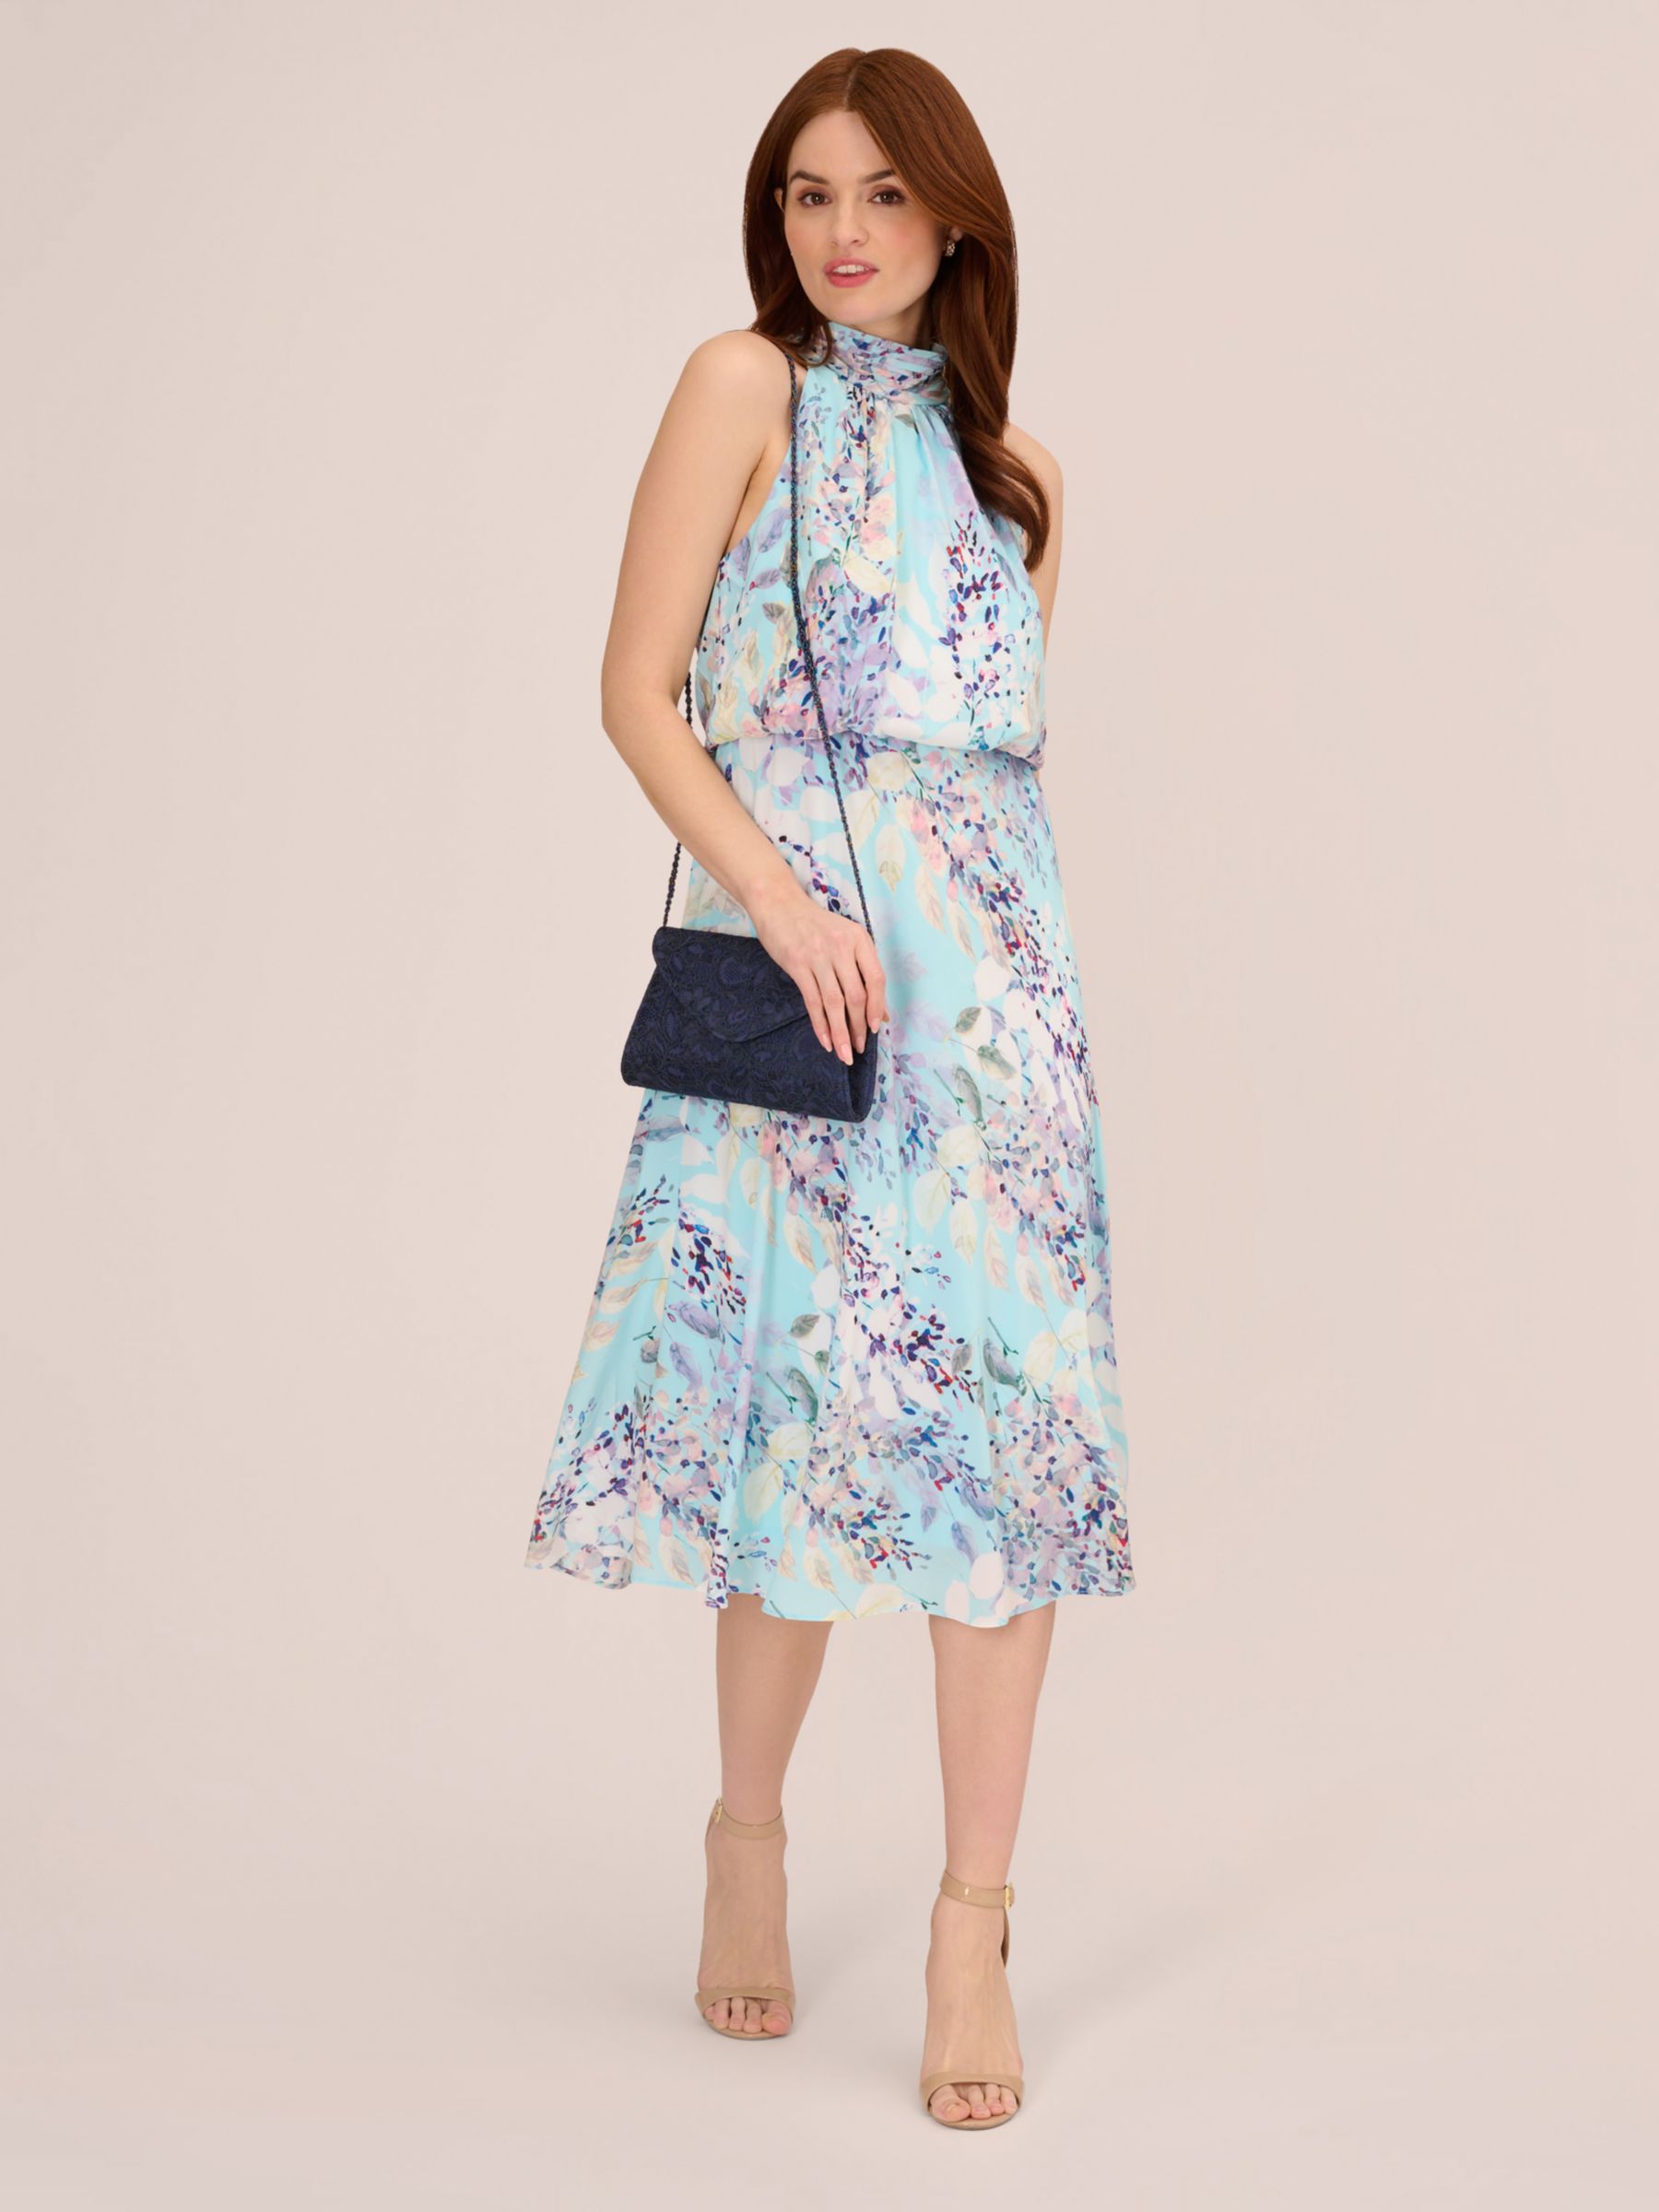 Adrianna Papell Watercolor Floral Midi Dress, Light Blue/Multi, 6